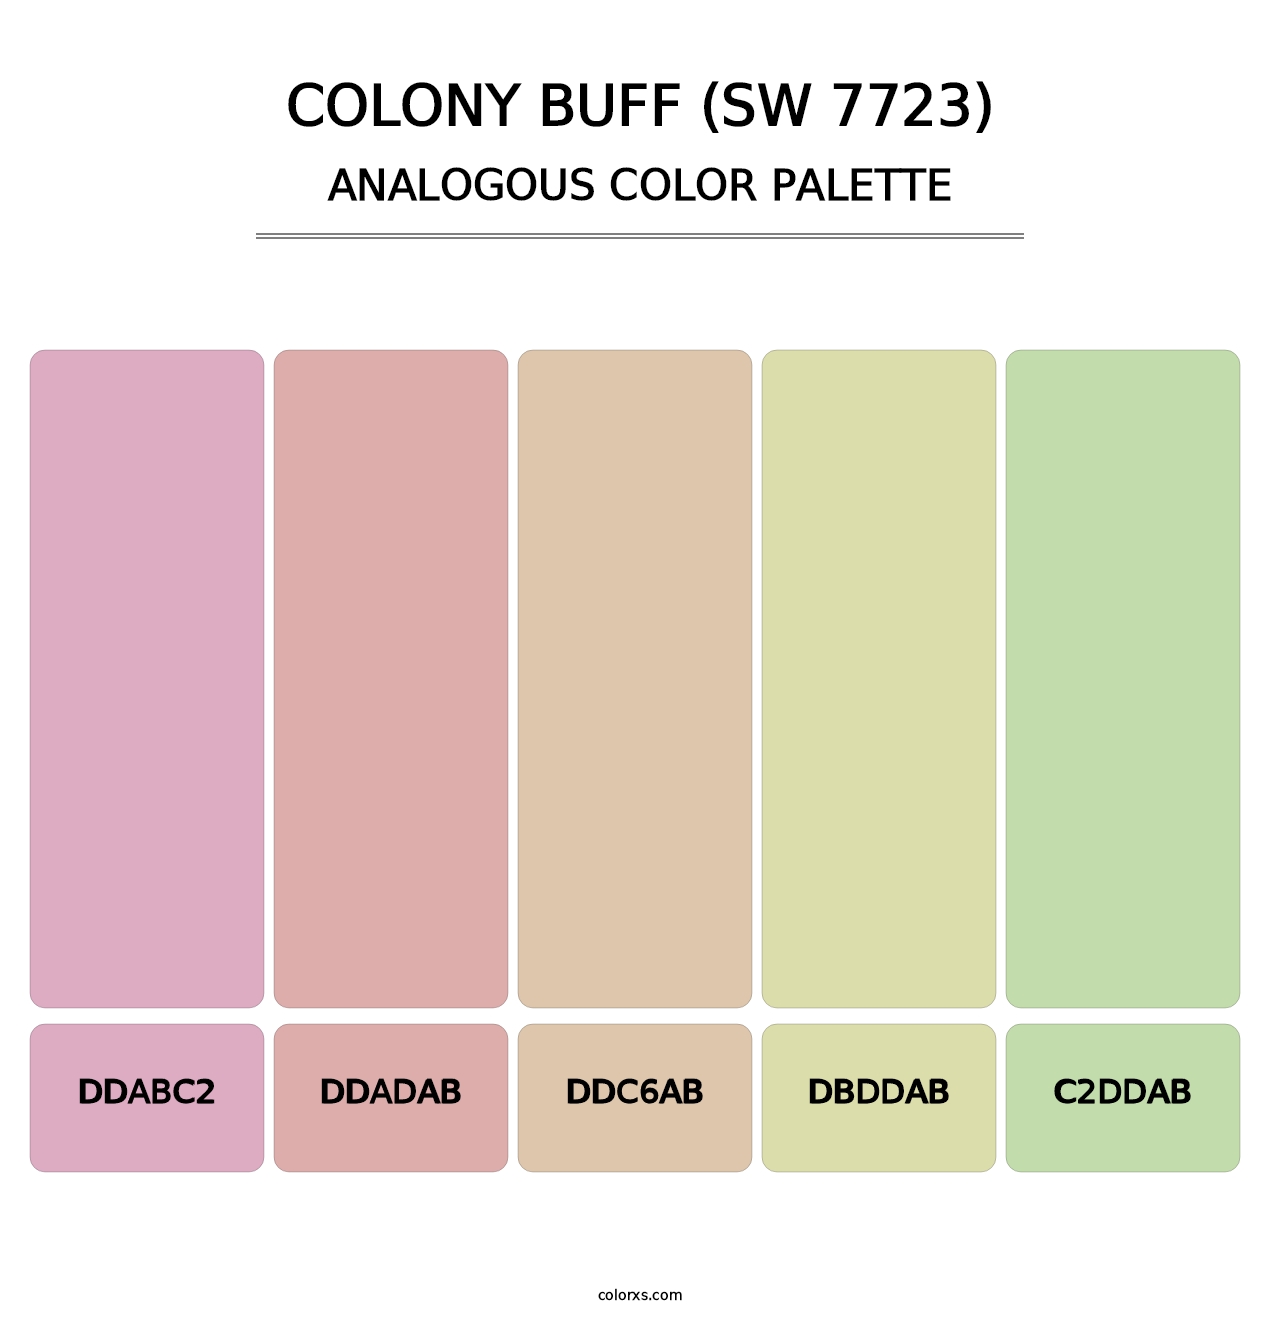 Colony Buff (SW 7723) - Analogous Color Palette